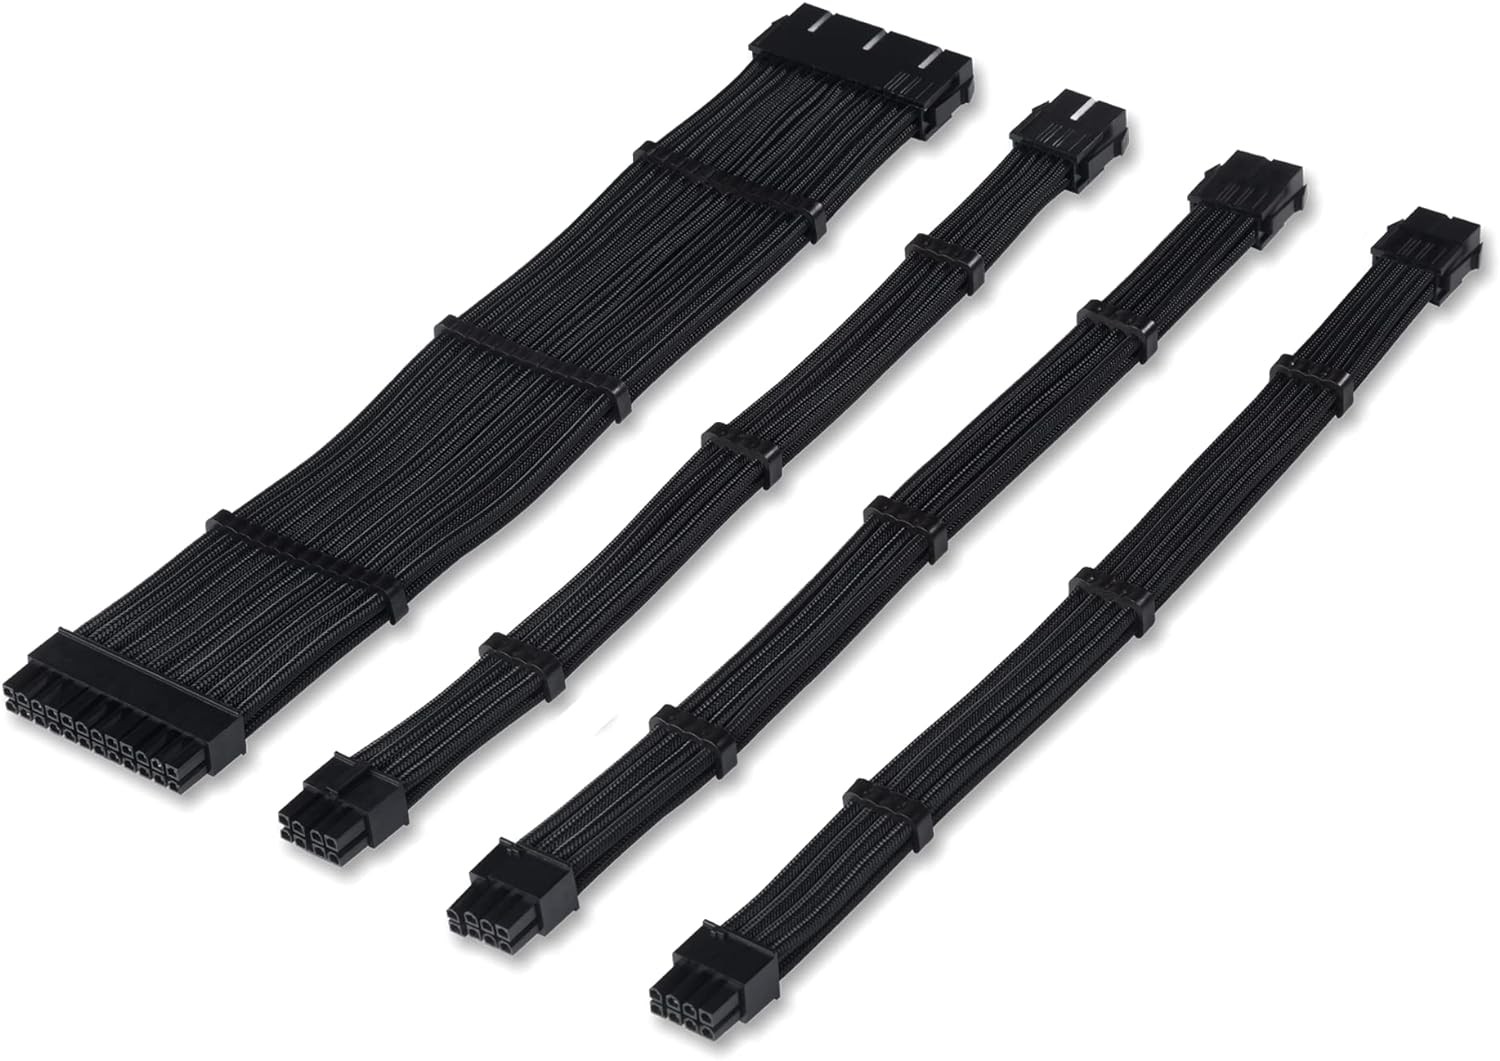 Tecware Flex Sleeved Extension Cables Set (Black) TWAC-FLEXBK